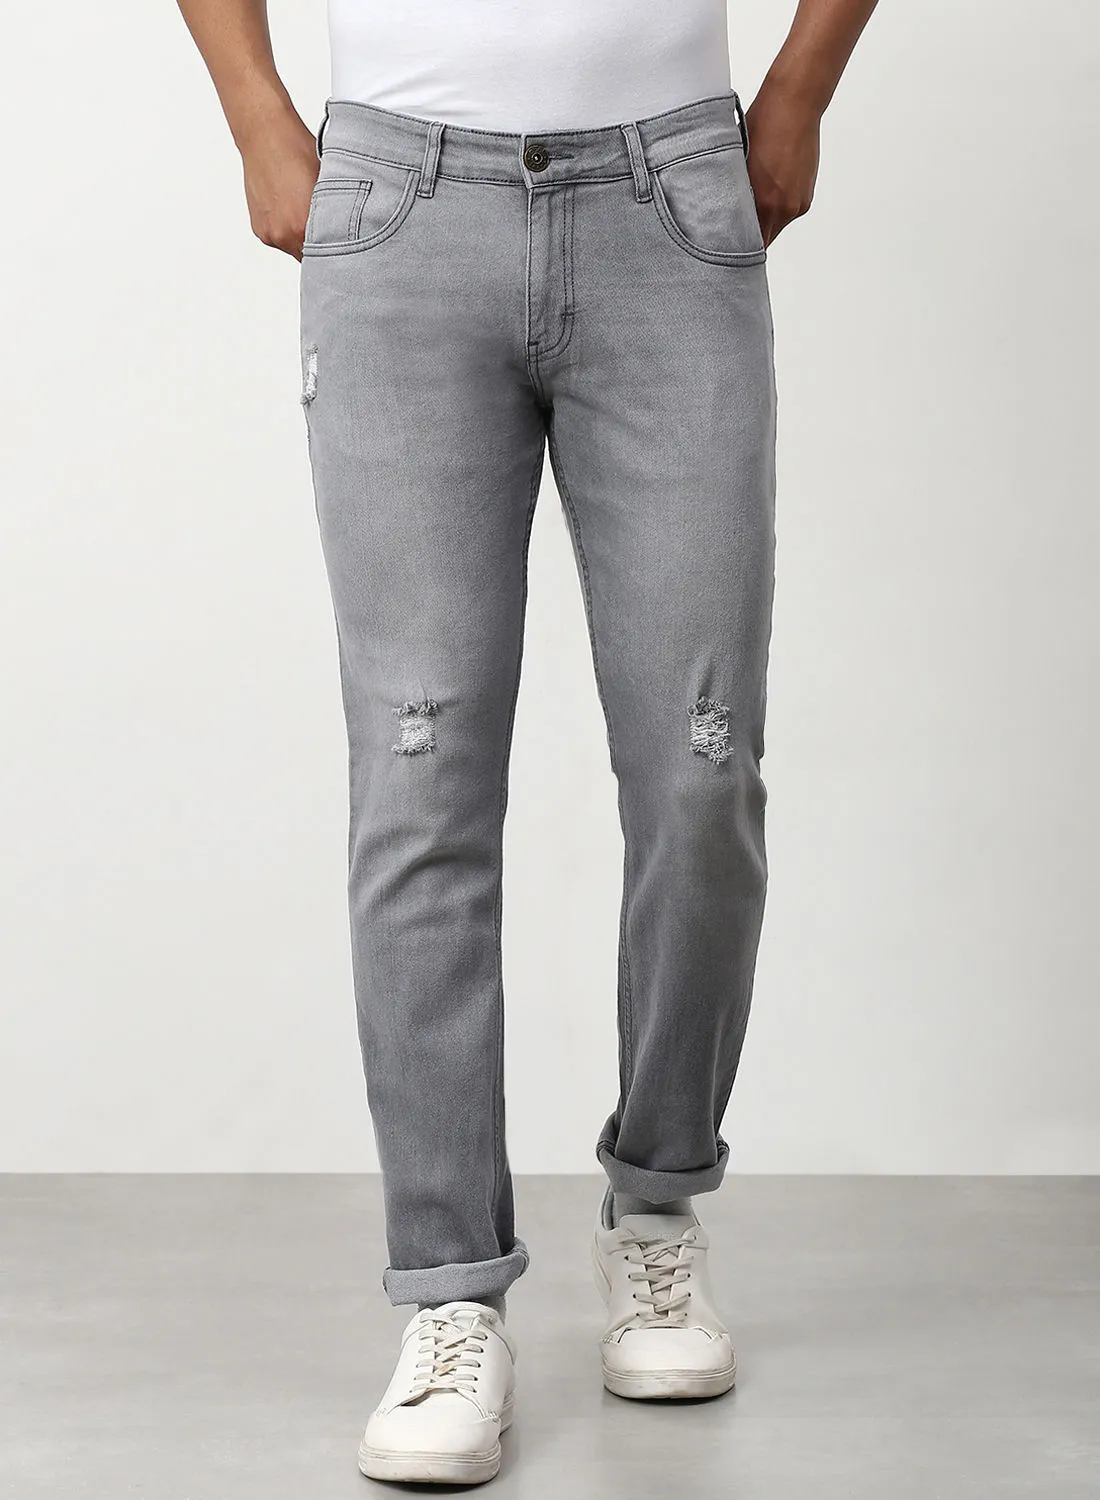 ABOF Slim Fit Jeans Grey Wash